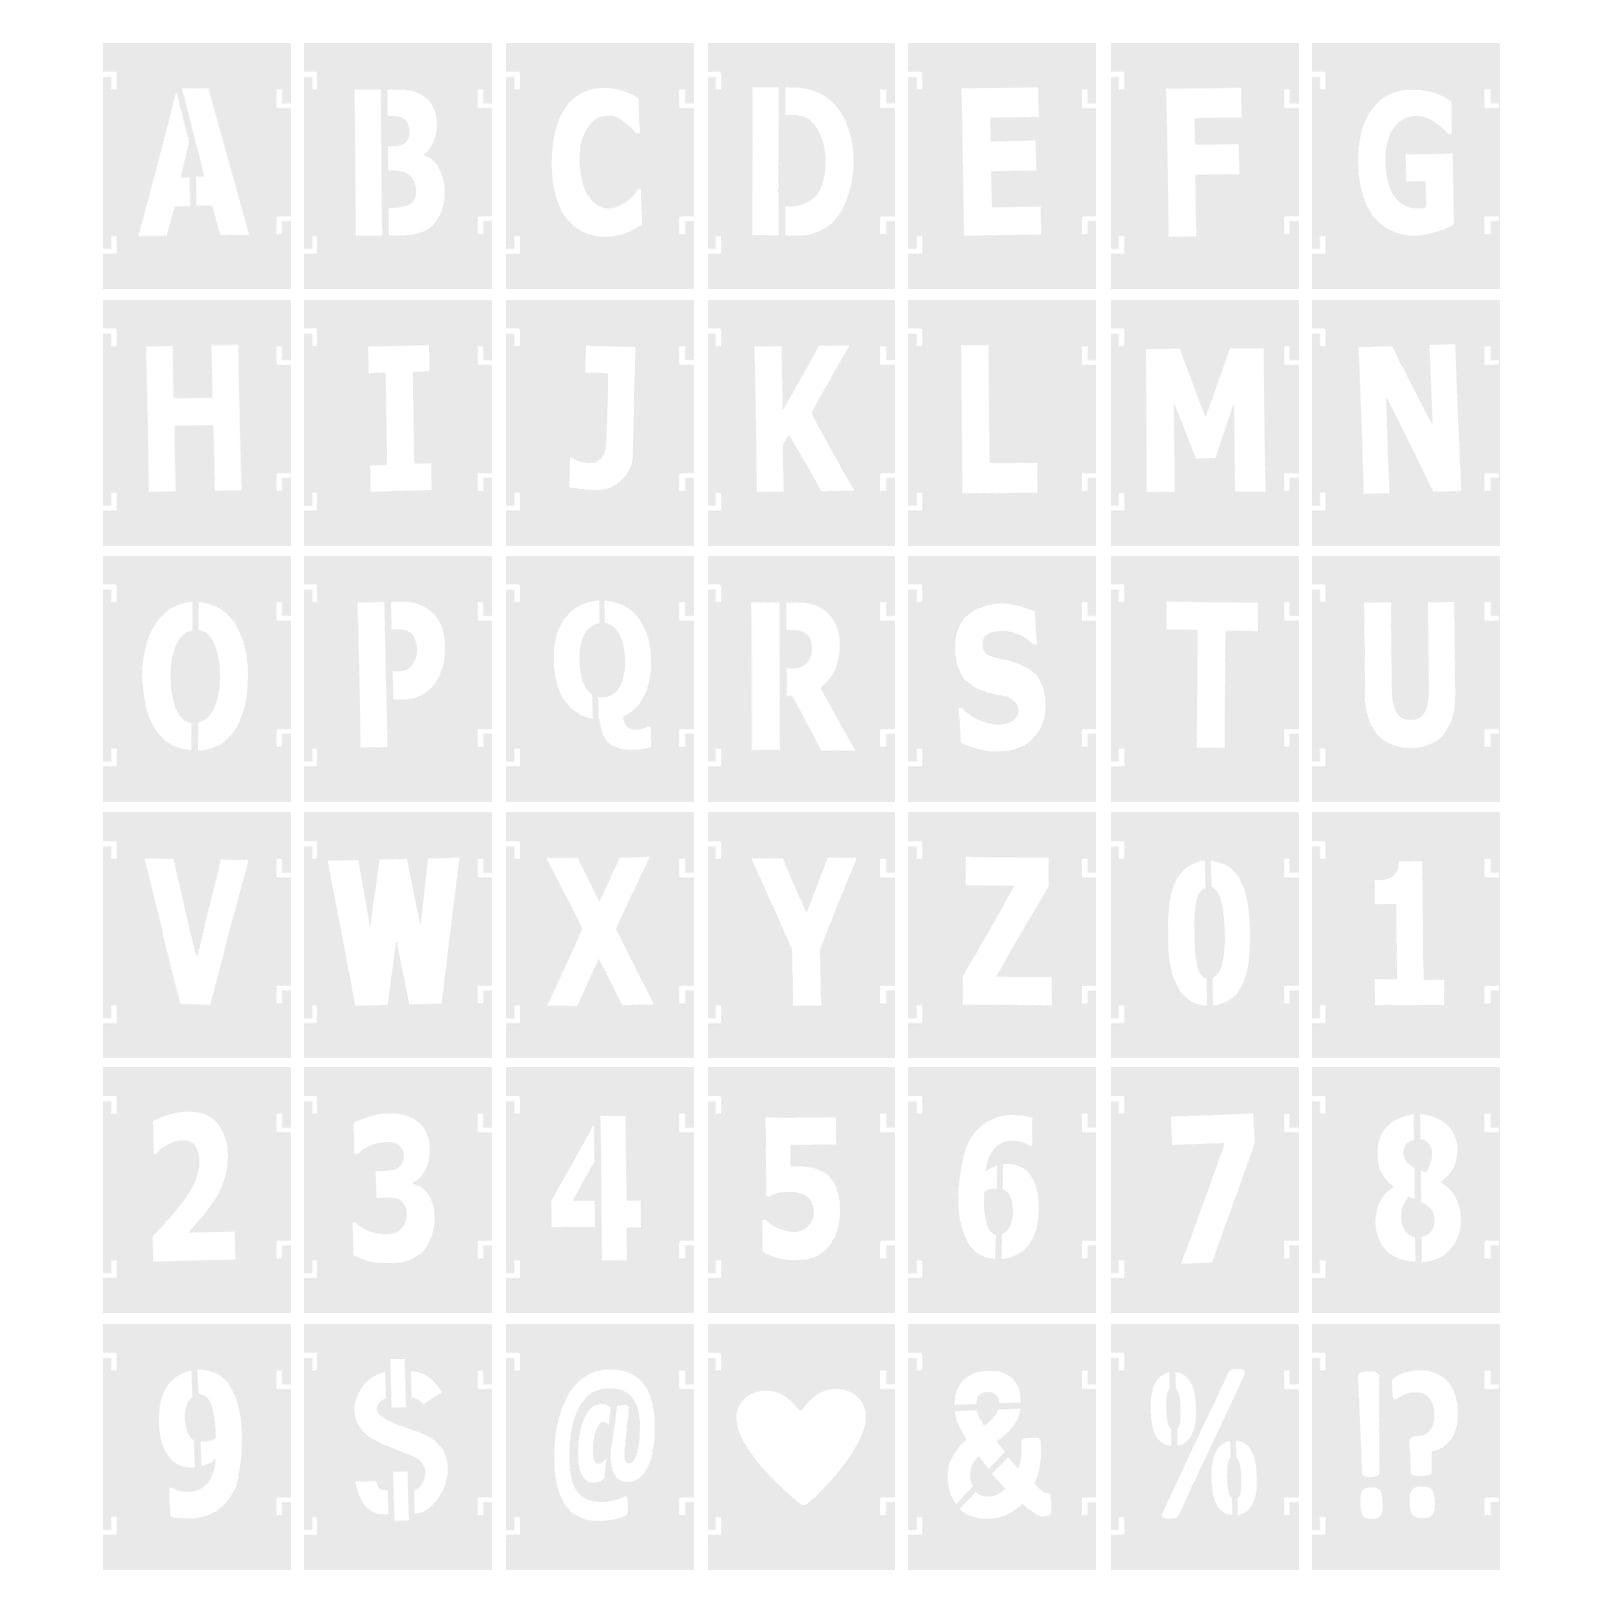 YEAJON 6 inch Letter Stencils Symbol Numbers Craft Stencils, 42 Pcs Reusable Alphabet Templates Interlocking Stencil Kit for Paintin